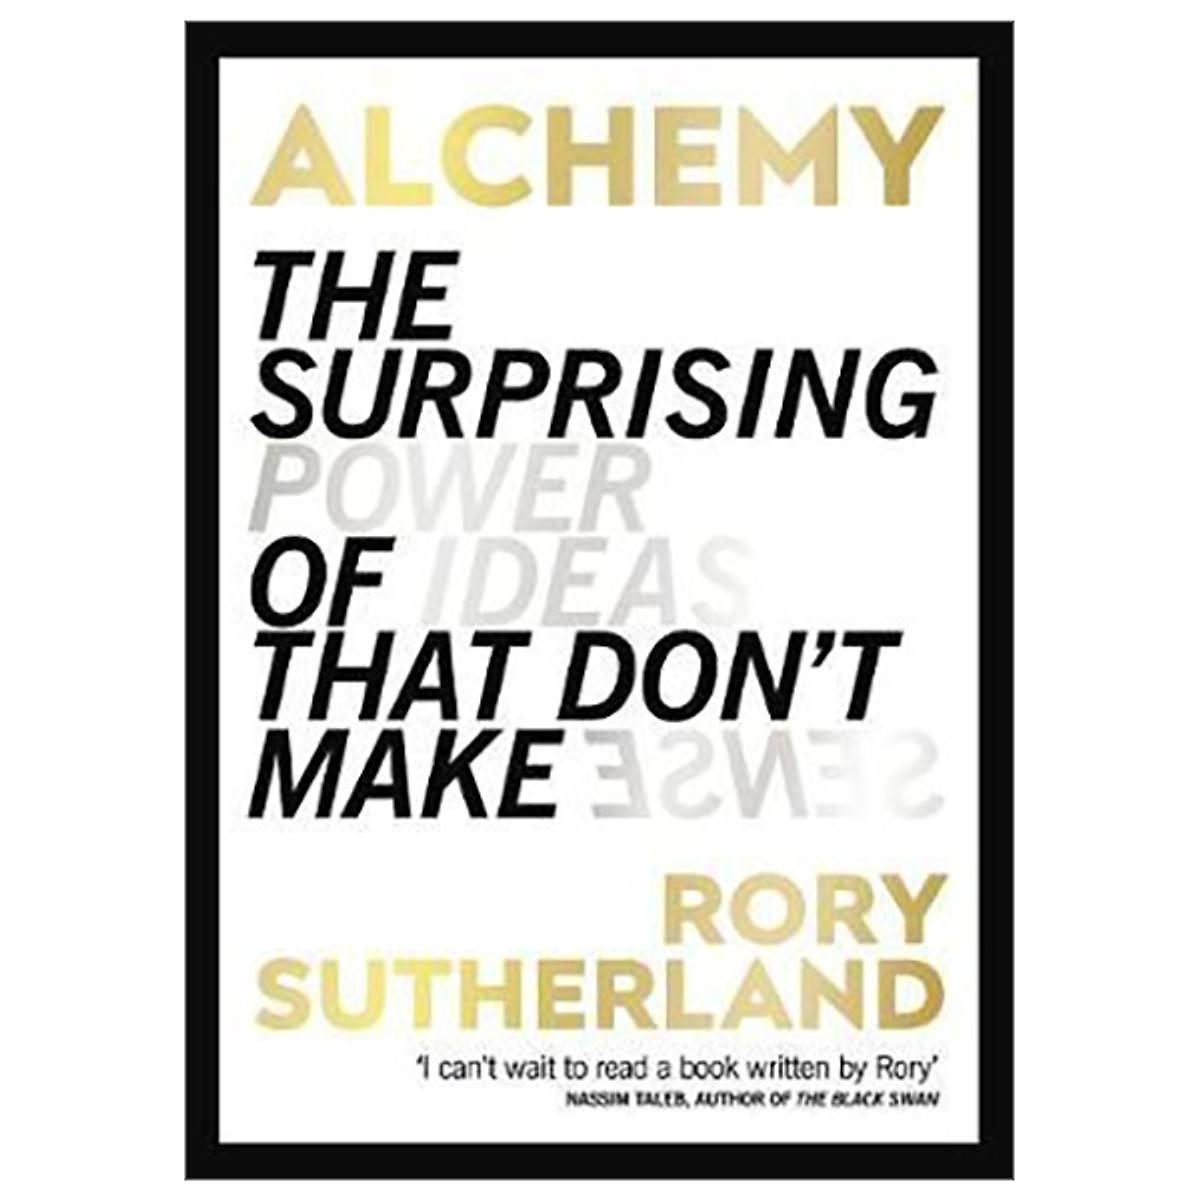 Alchemy: The Surprising Power Of Ideas That Don't Make Sense